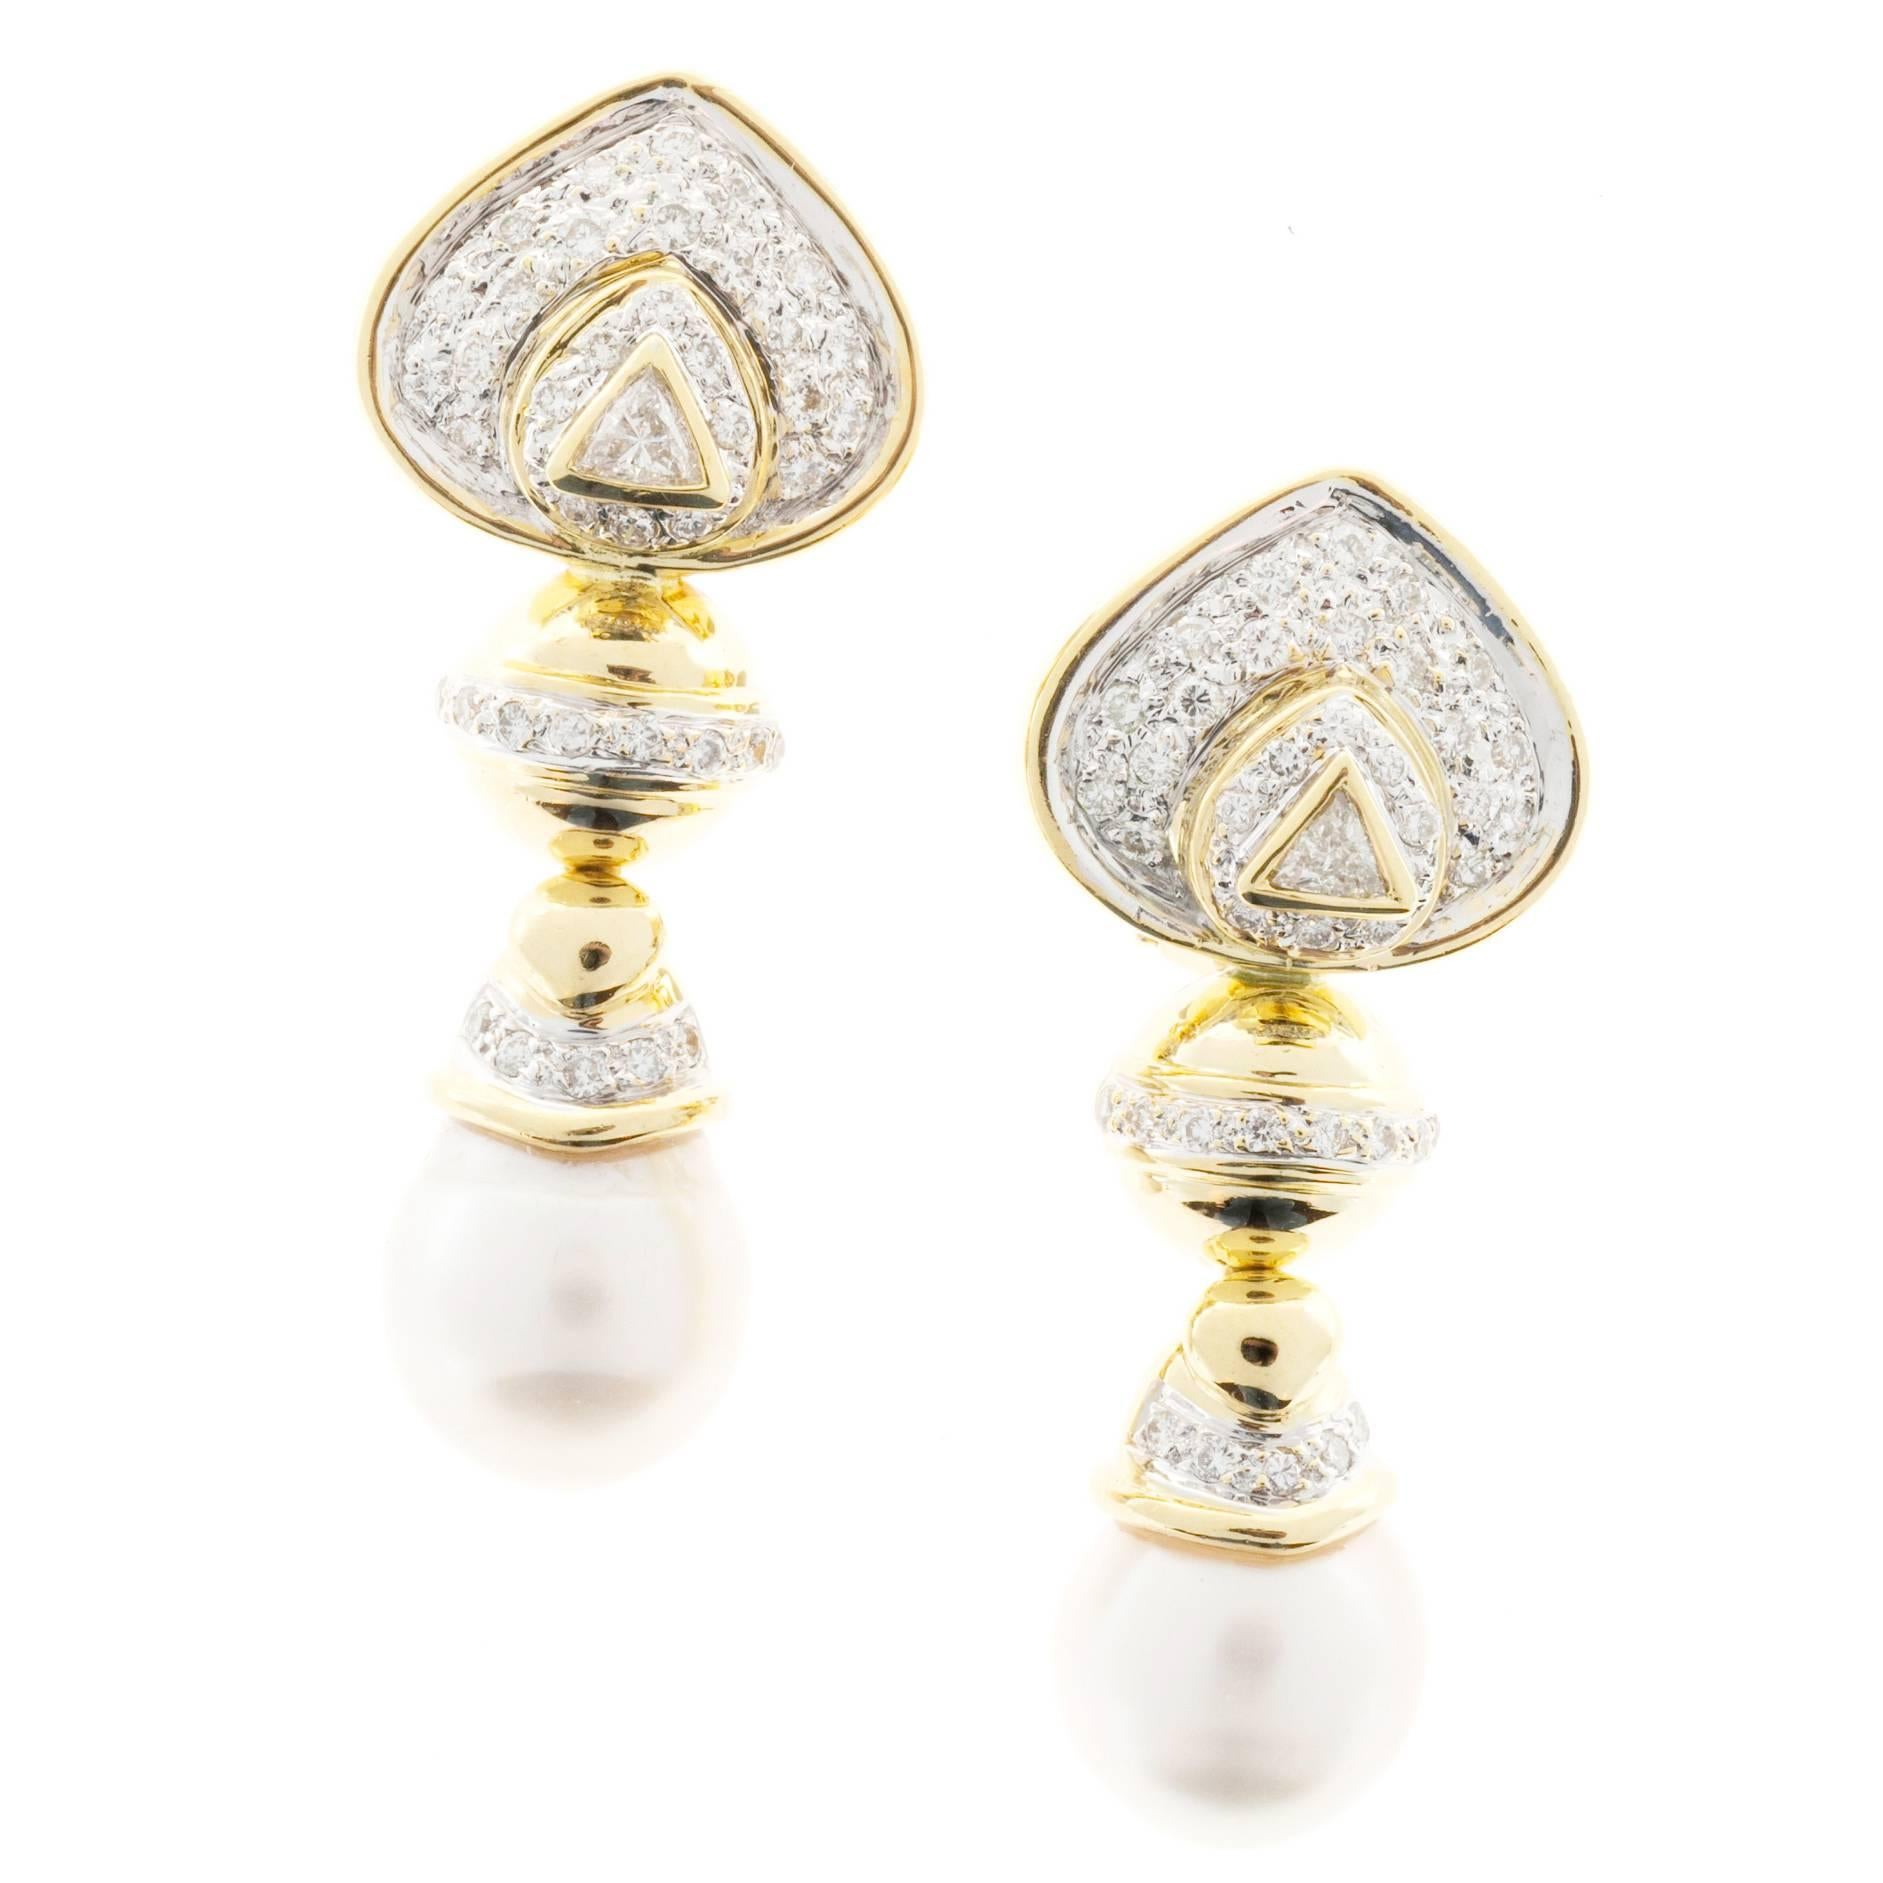 South Sea Cultured Pearl Diamond Dangle Earrings